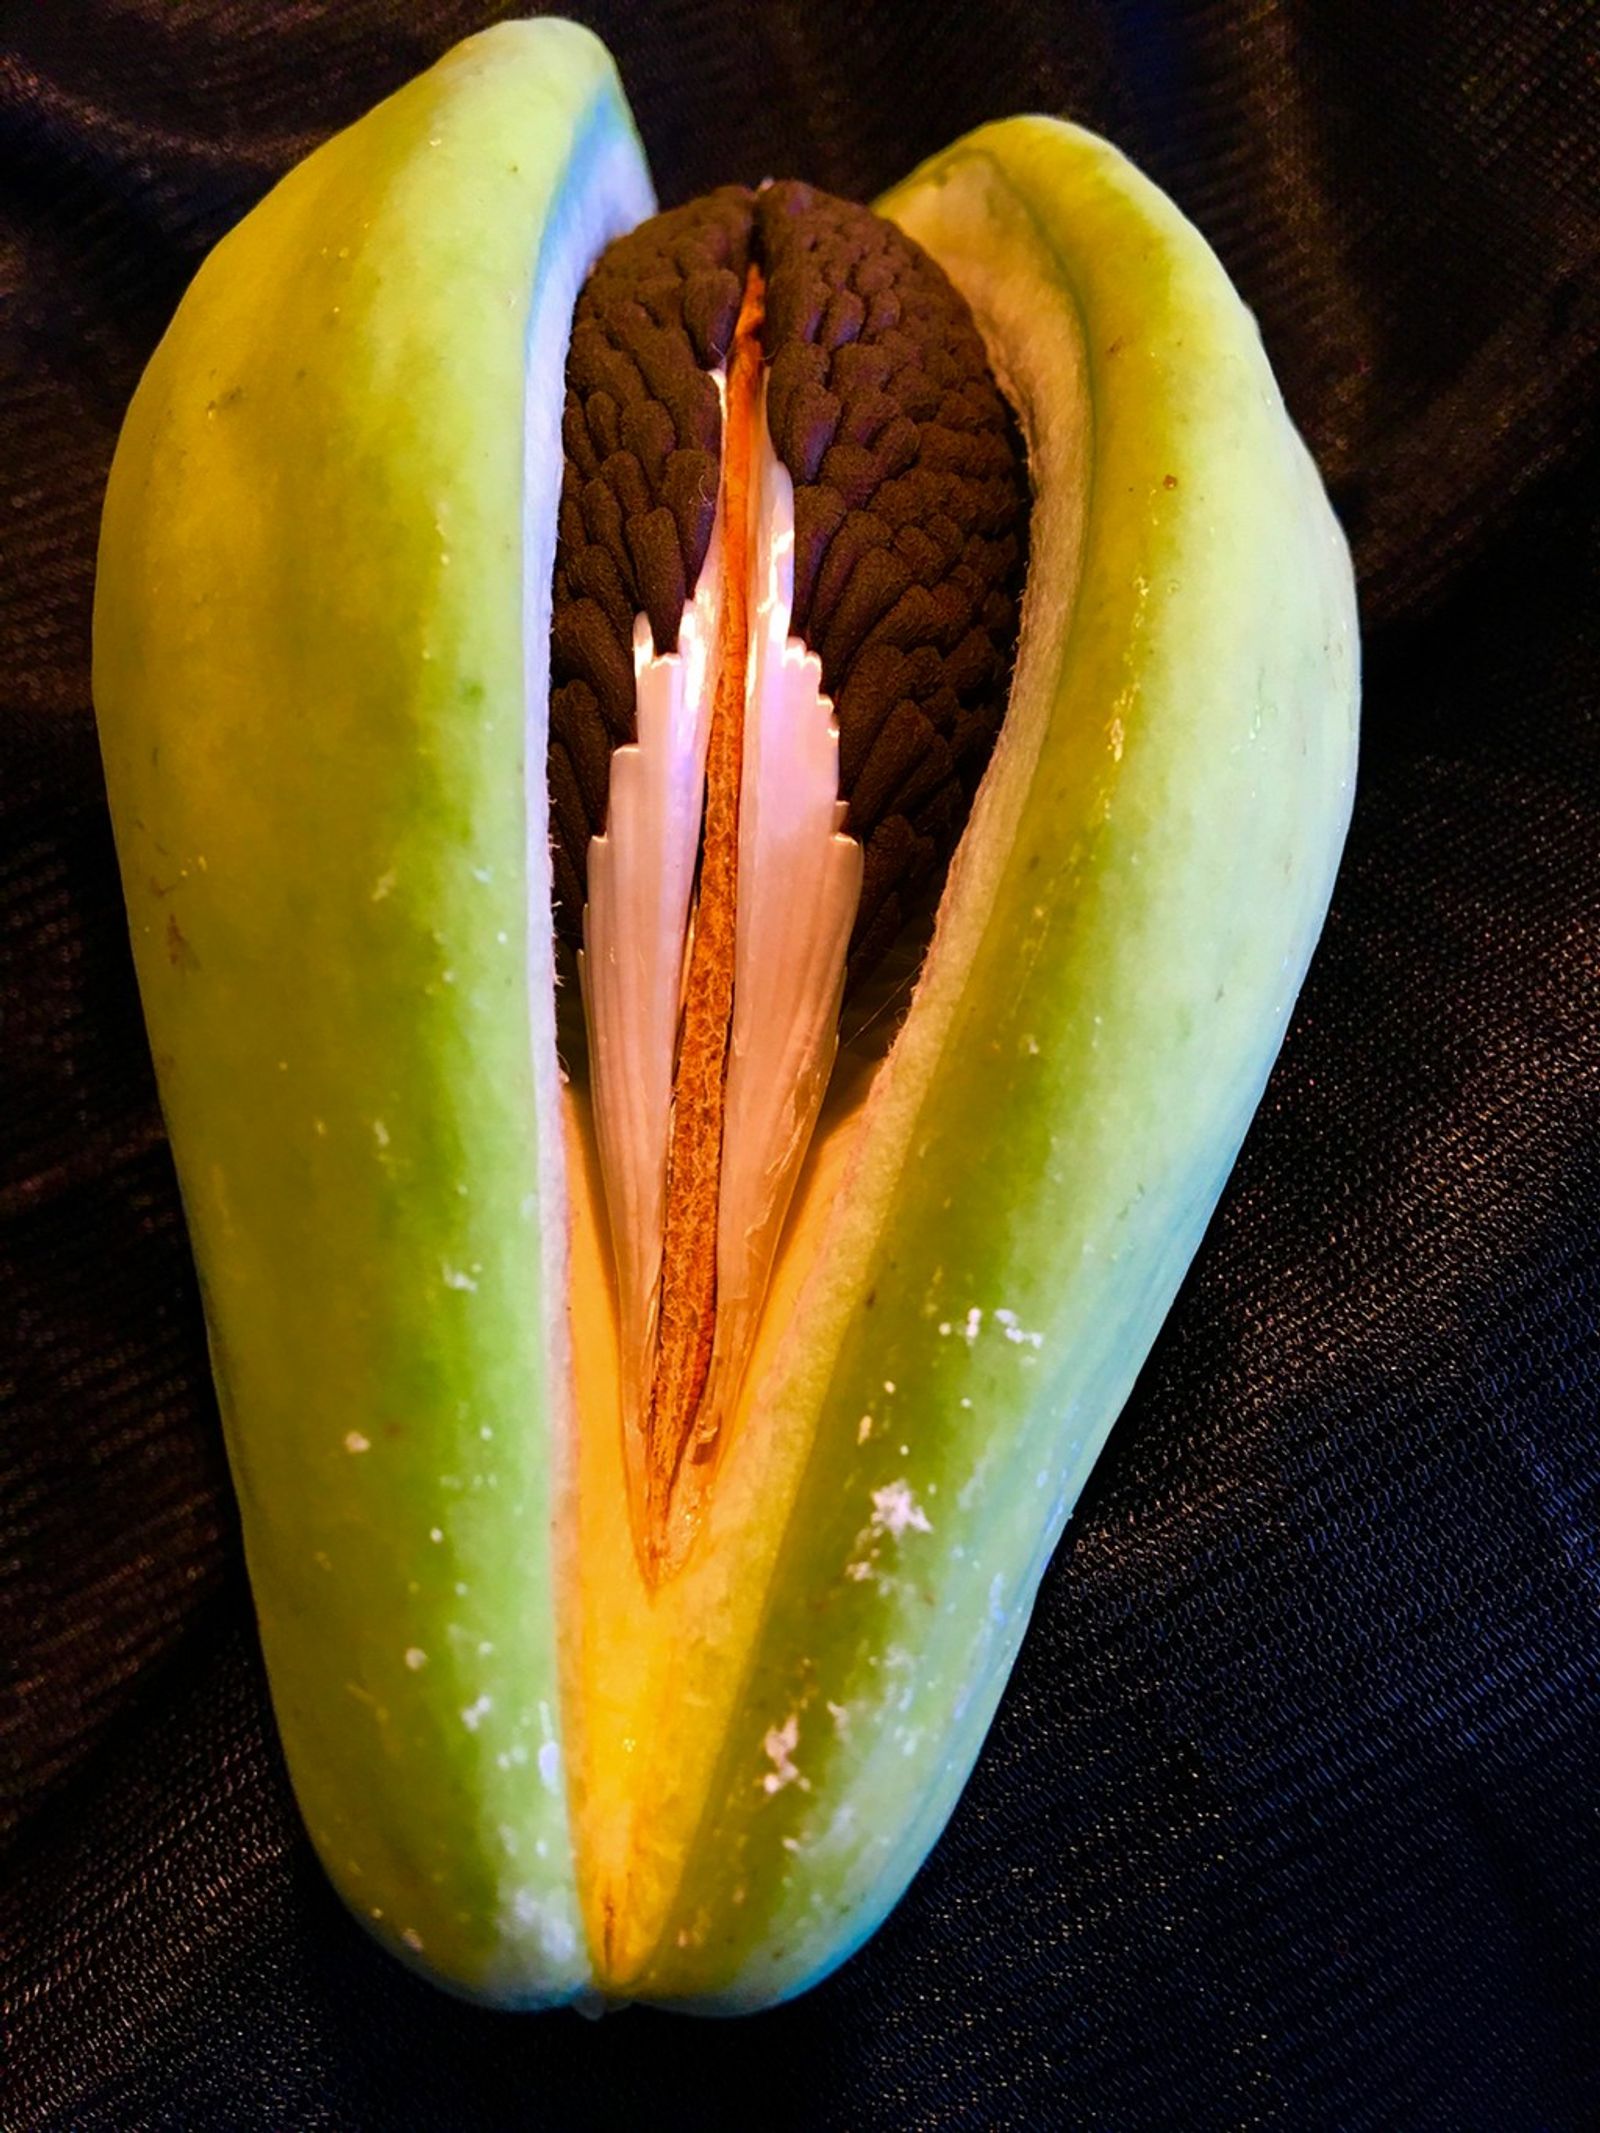 © Bettie Coetzee Lambrecht - Grenadilla Passiflora Fruit with seed inside